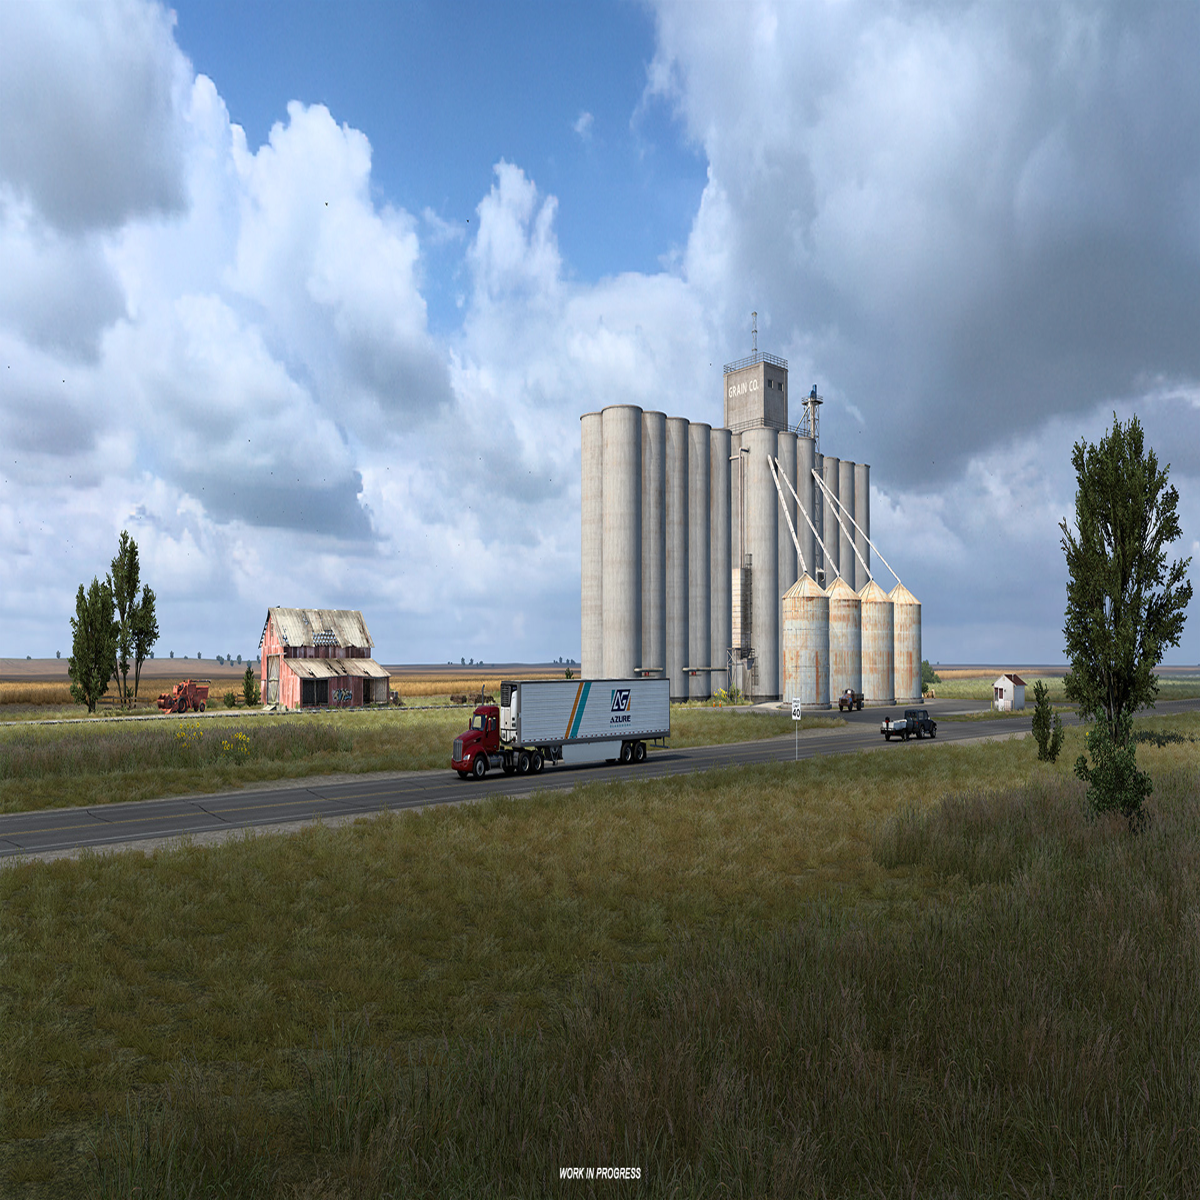 American Truck Simulator - Kansas on Steam